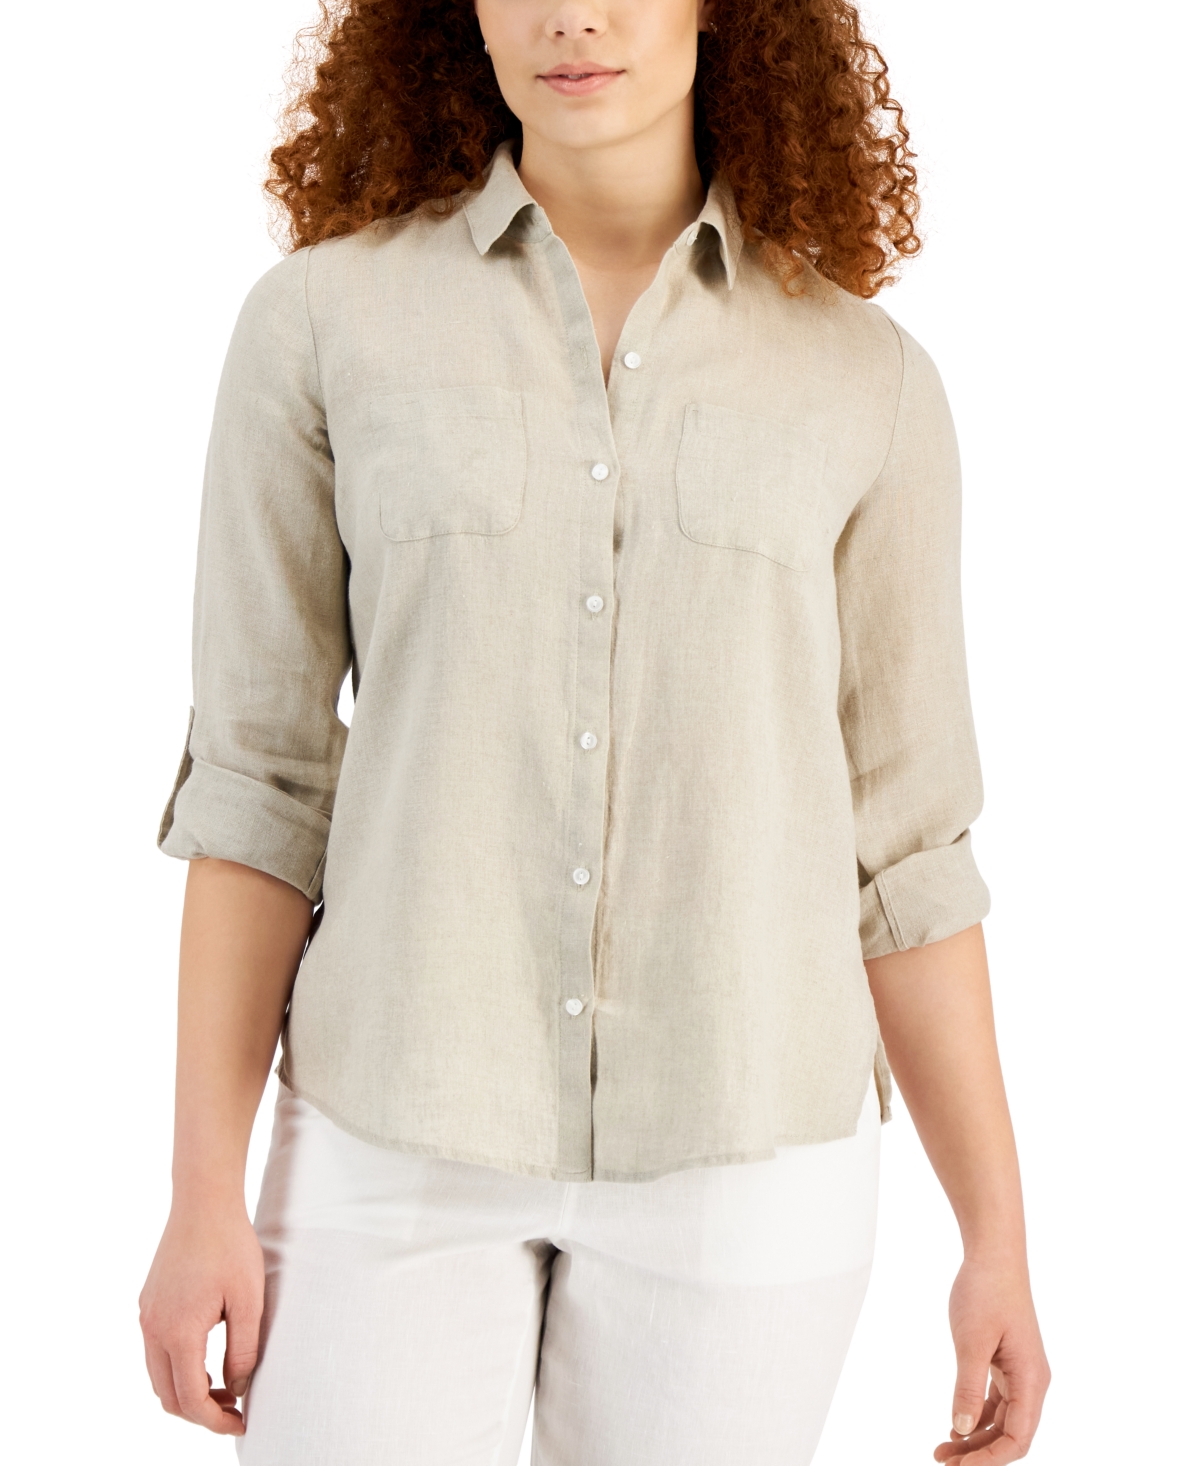 Women's 100% Linen Shirt, Created for Macy's - Flax